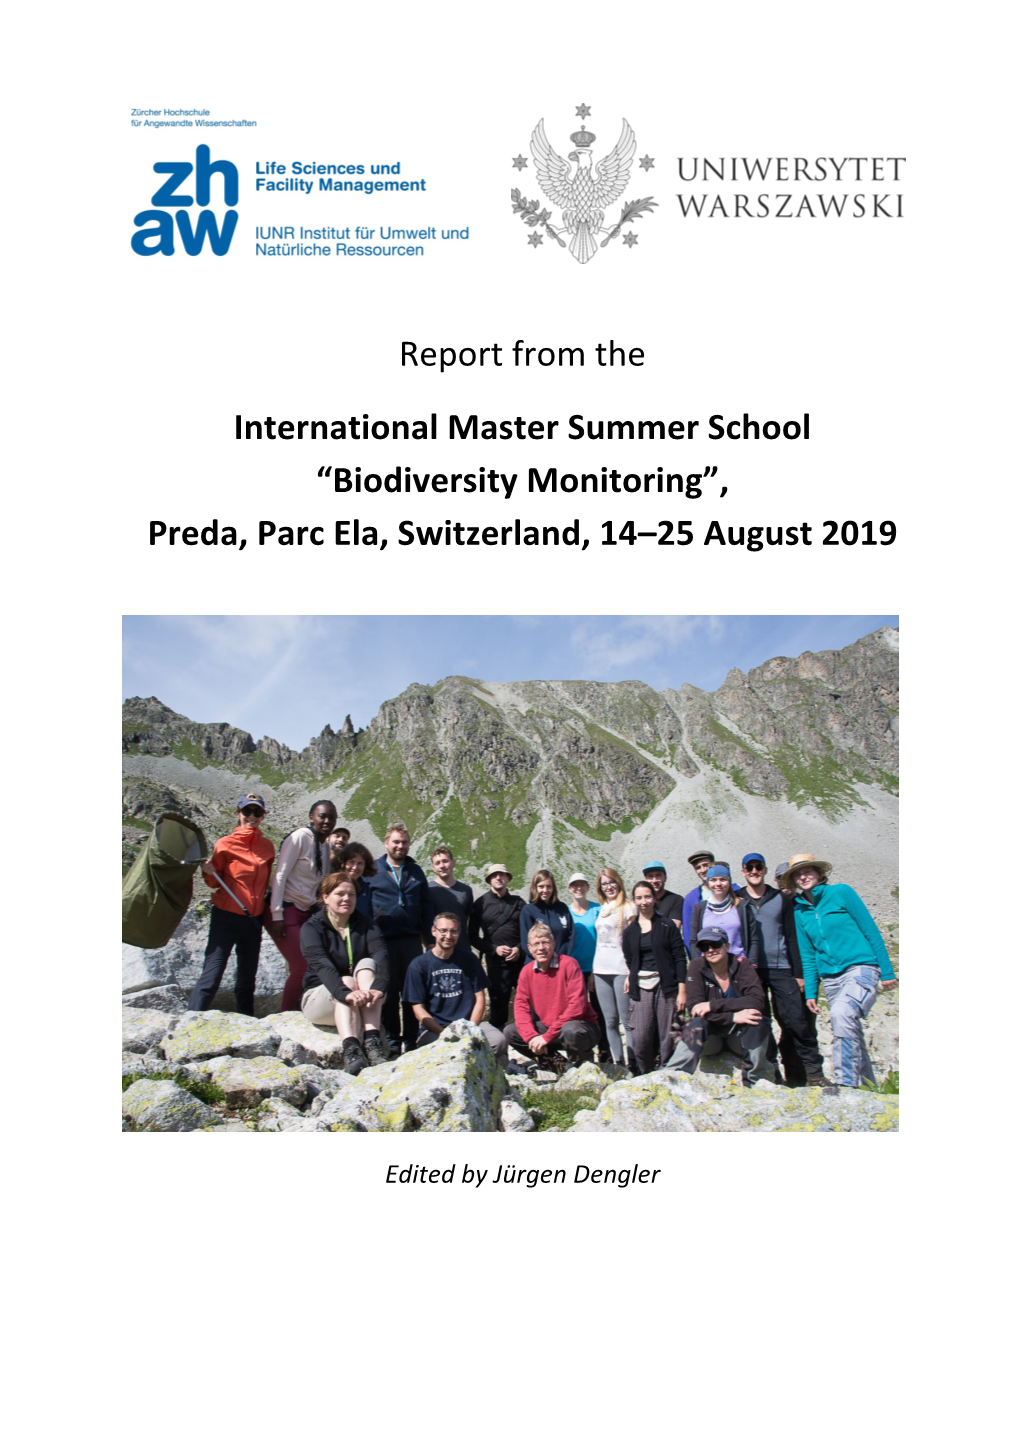 Report from the International Master Summer School “Biodiversity Monitoring”, Preda, Parc Ela, Switzerland, 14–25 August 2019